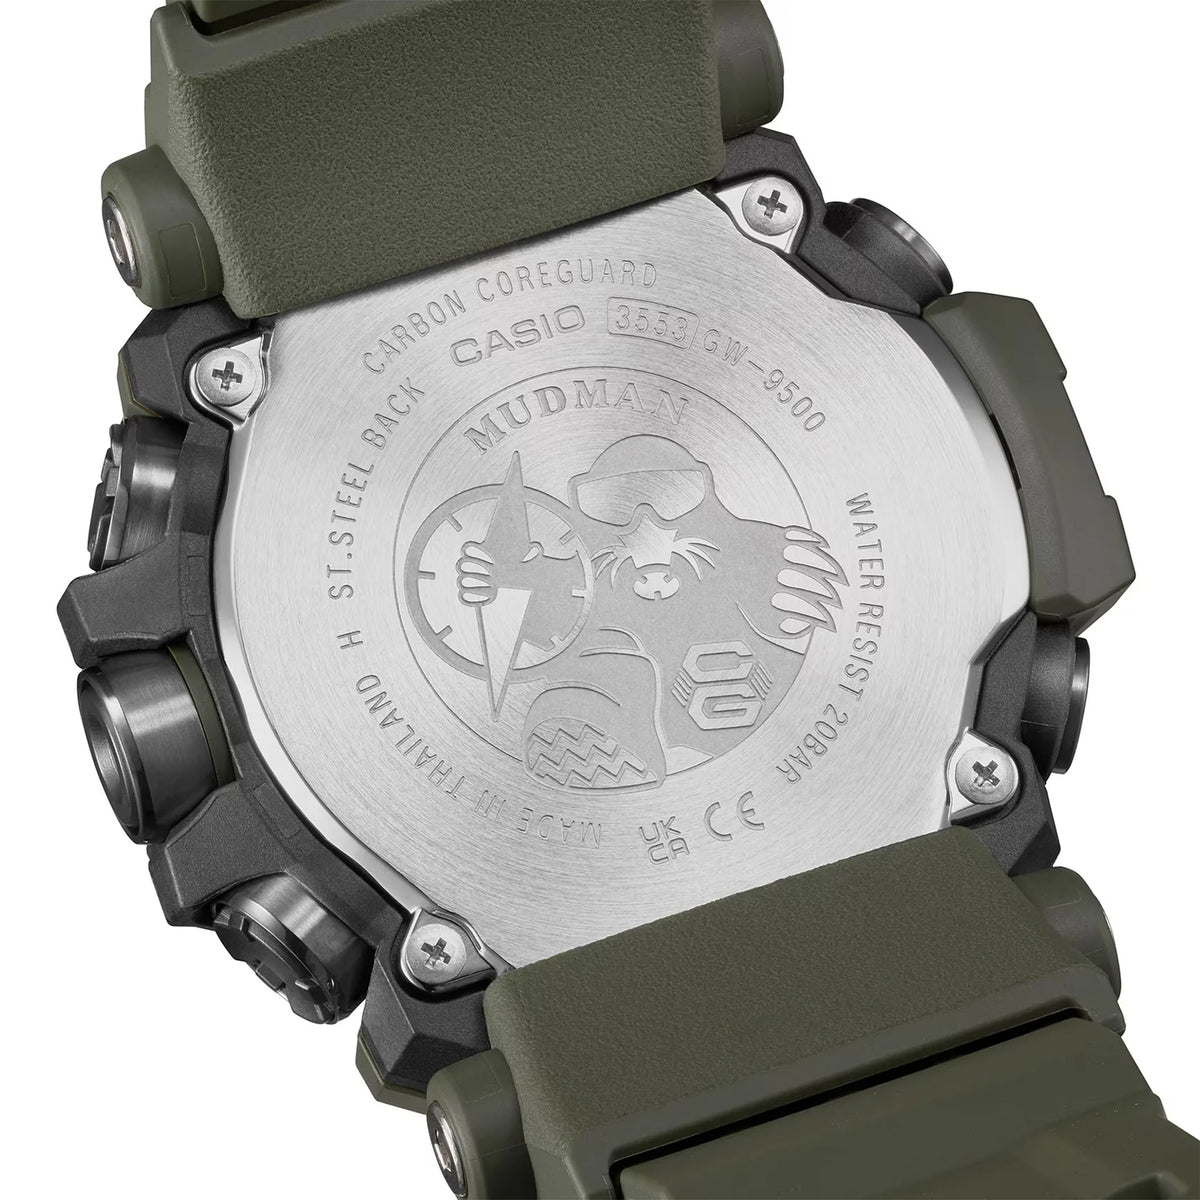 Casio G-SHOCK Men's 53mm Digital Watch GW9500-3D